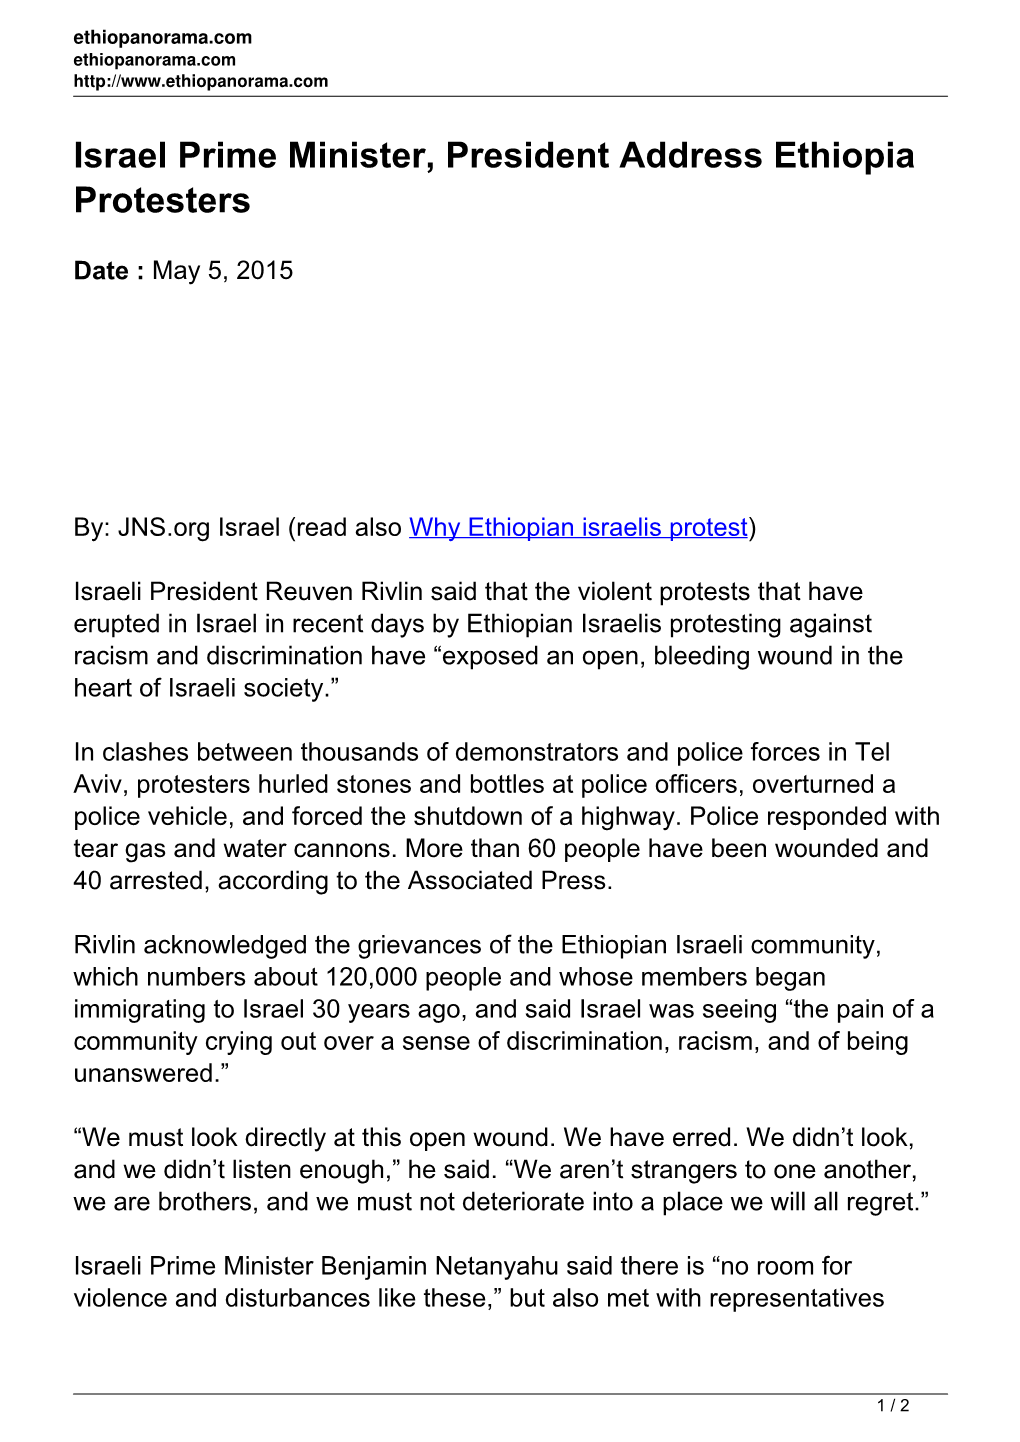 Israel Prime Minister, President Address Ethiopia Protesters